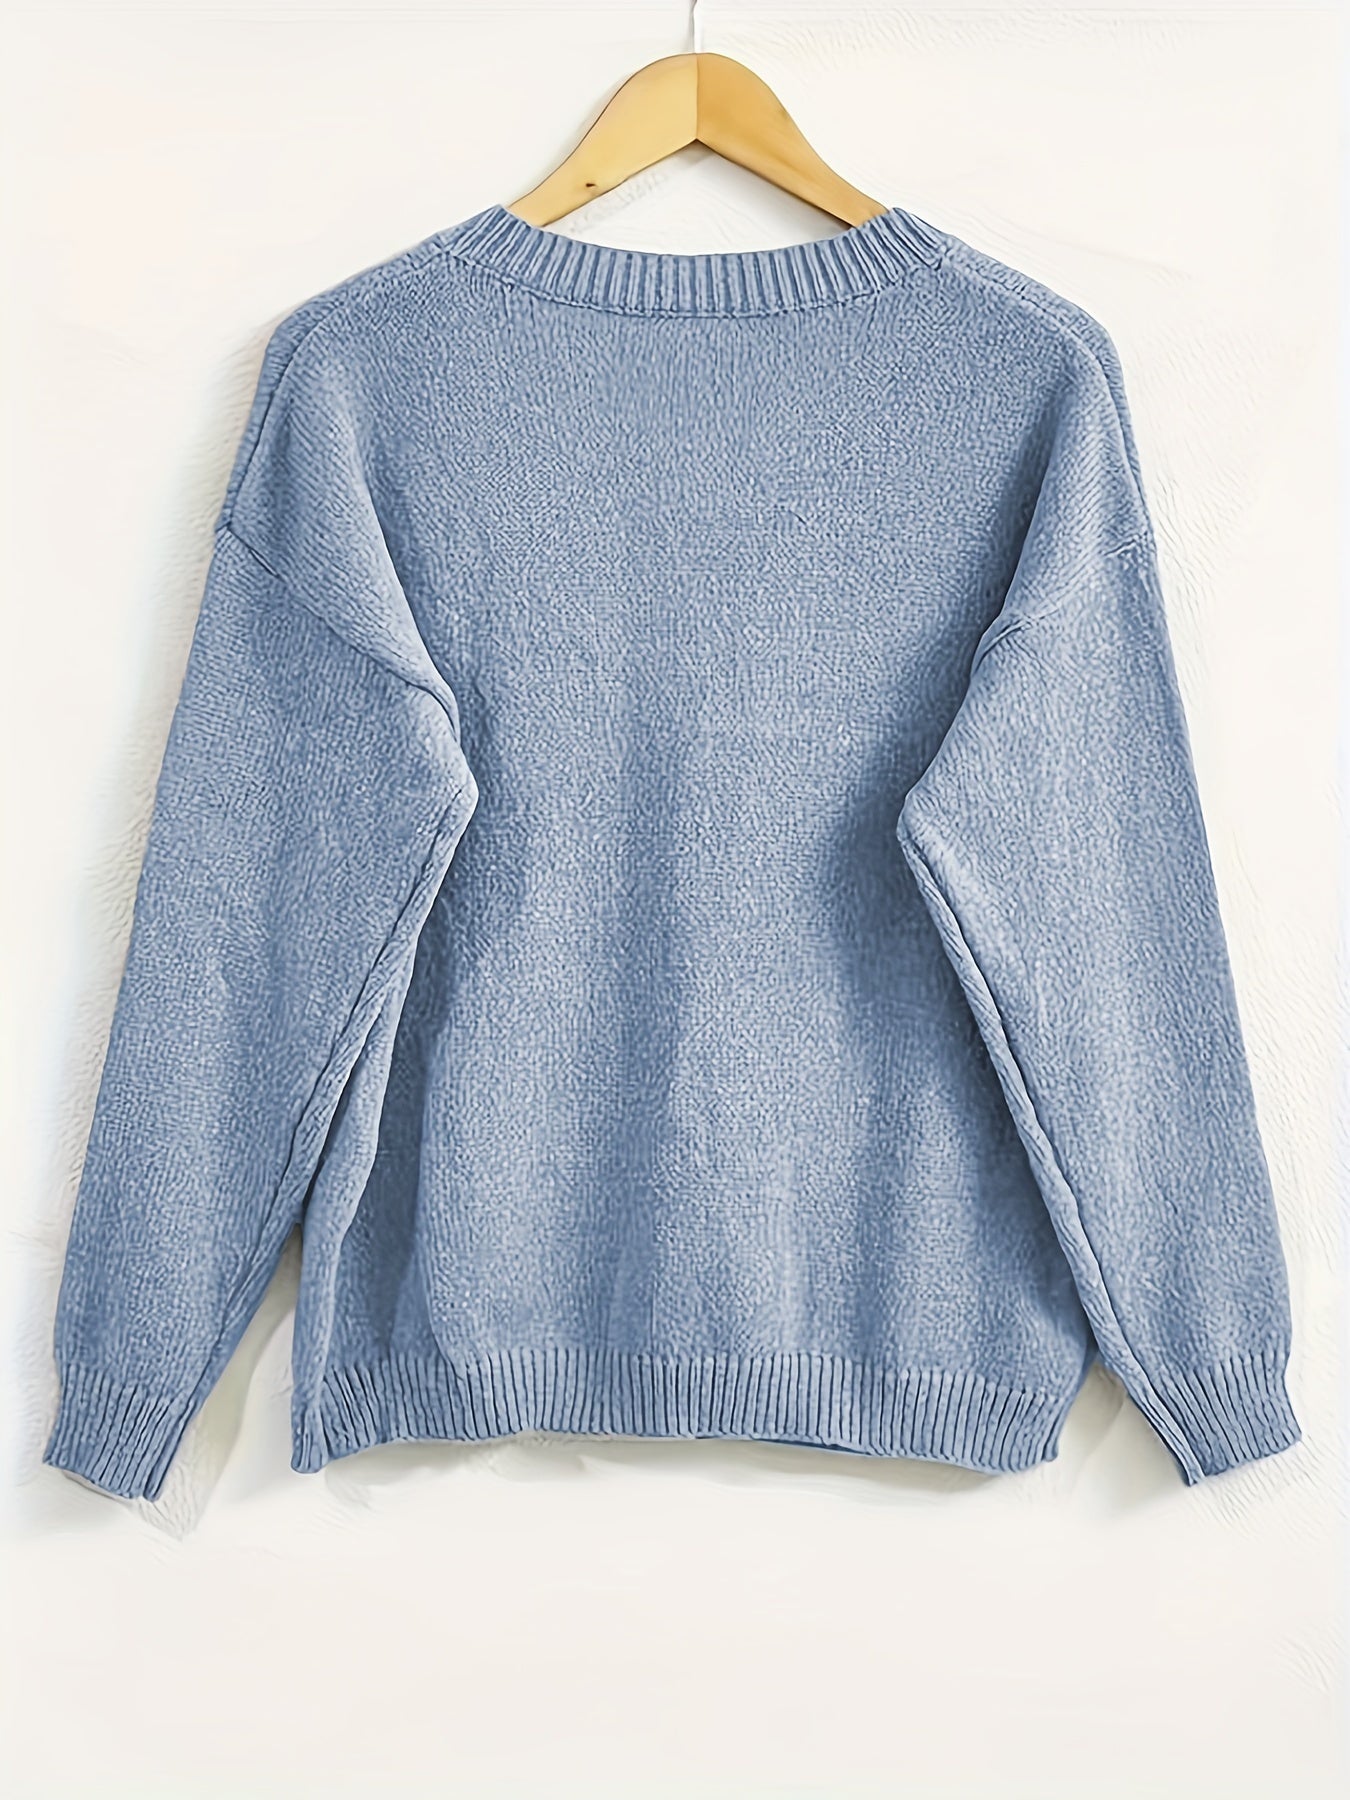 Vorioal Super Comfy Sweater Warm Cardigan